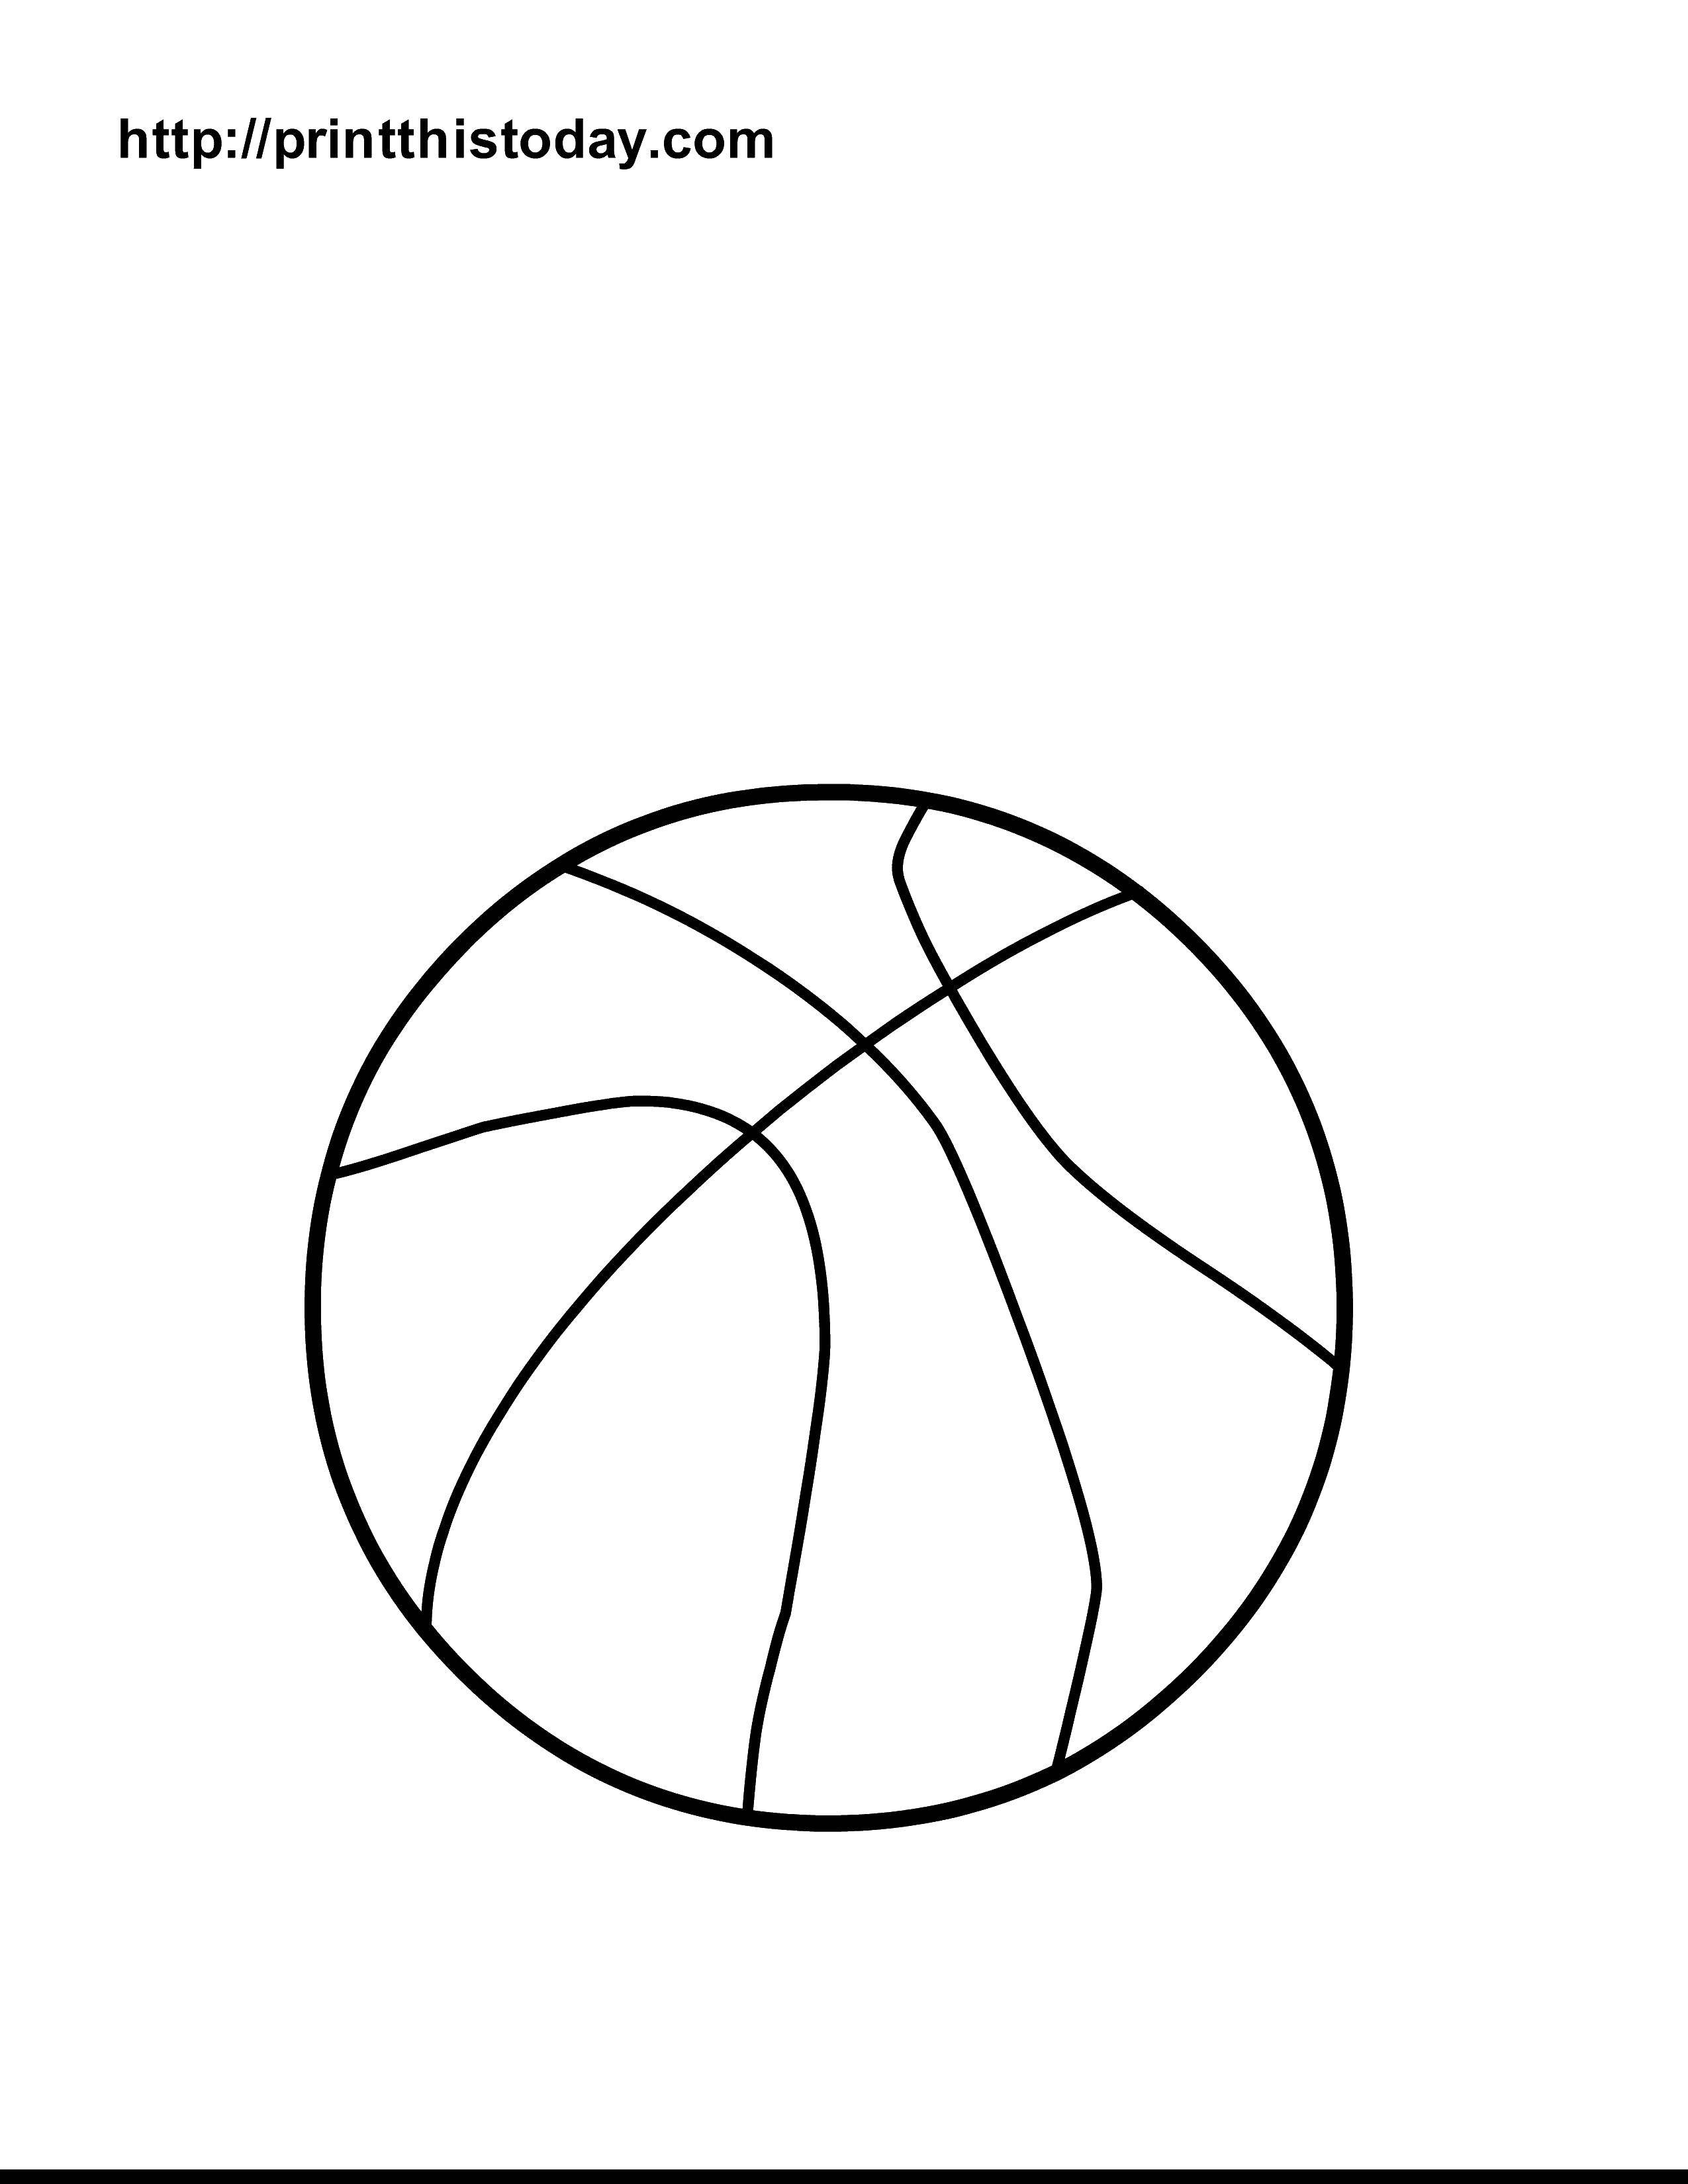 Название: Раскраска Контур баскетбольного мяча. Категория: Спорт. Теги: контур, мяч, баскетбол.